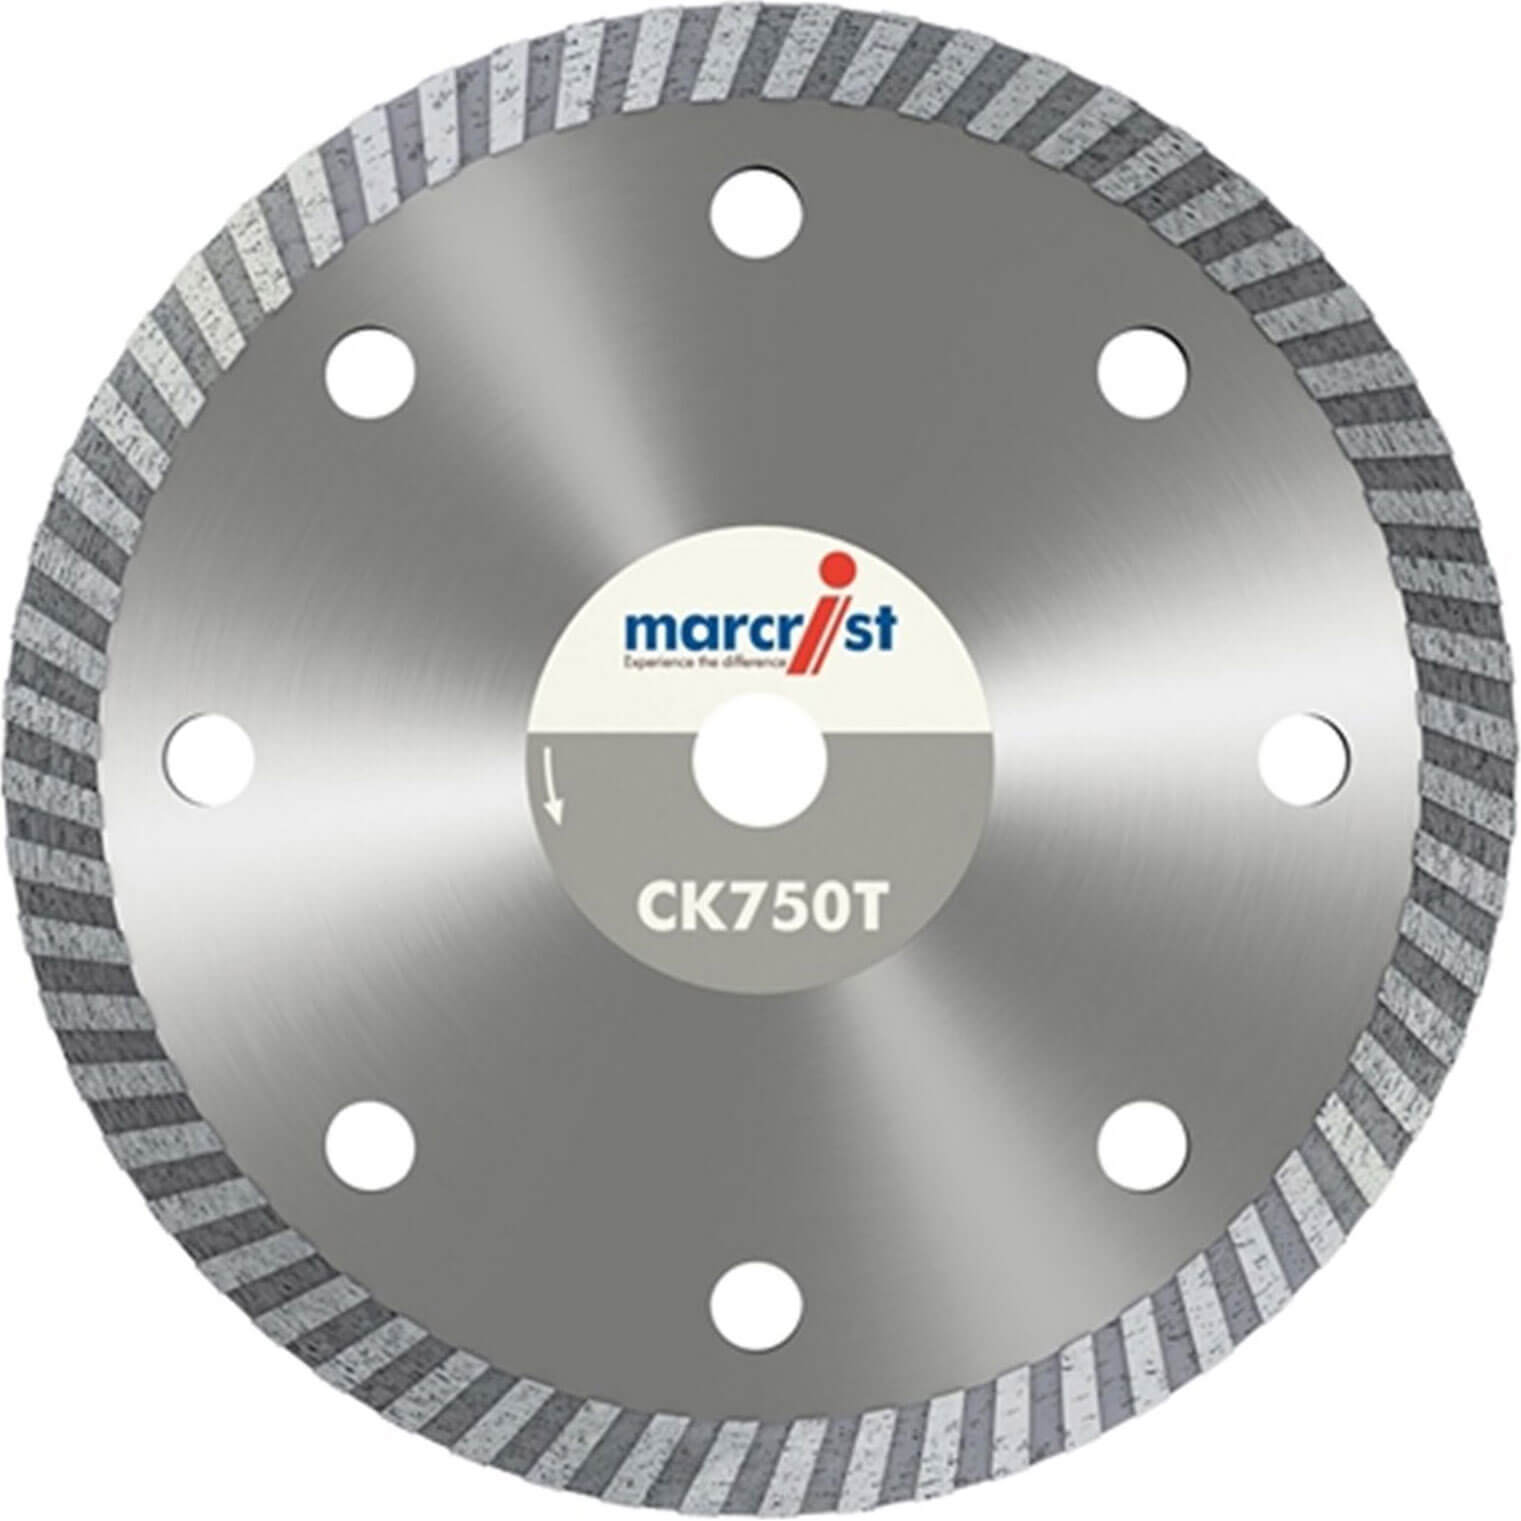 Photo of Marcrist Ck750t Ultra Thin Turbo Tile Diamond Cutting Disc 125mm